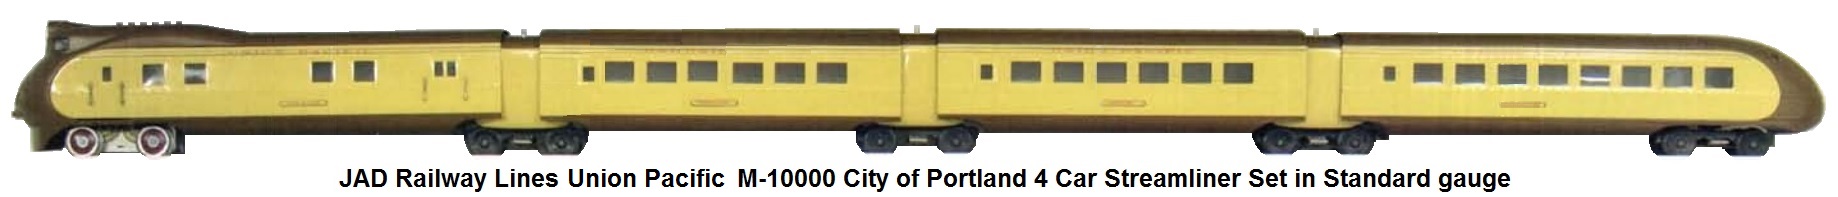 JAD Railway Lines Union Pacific M-10000 City of Portland Streamliner in Standard gauge